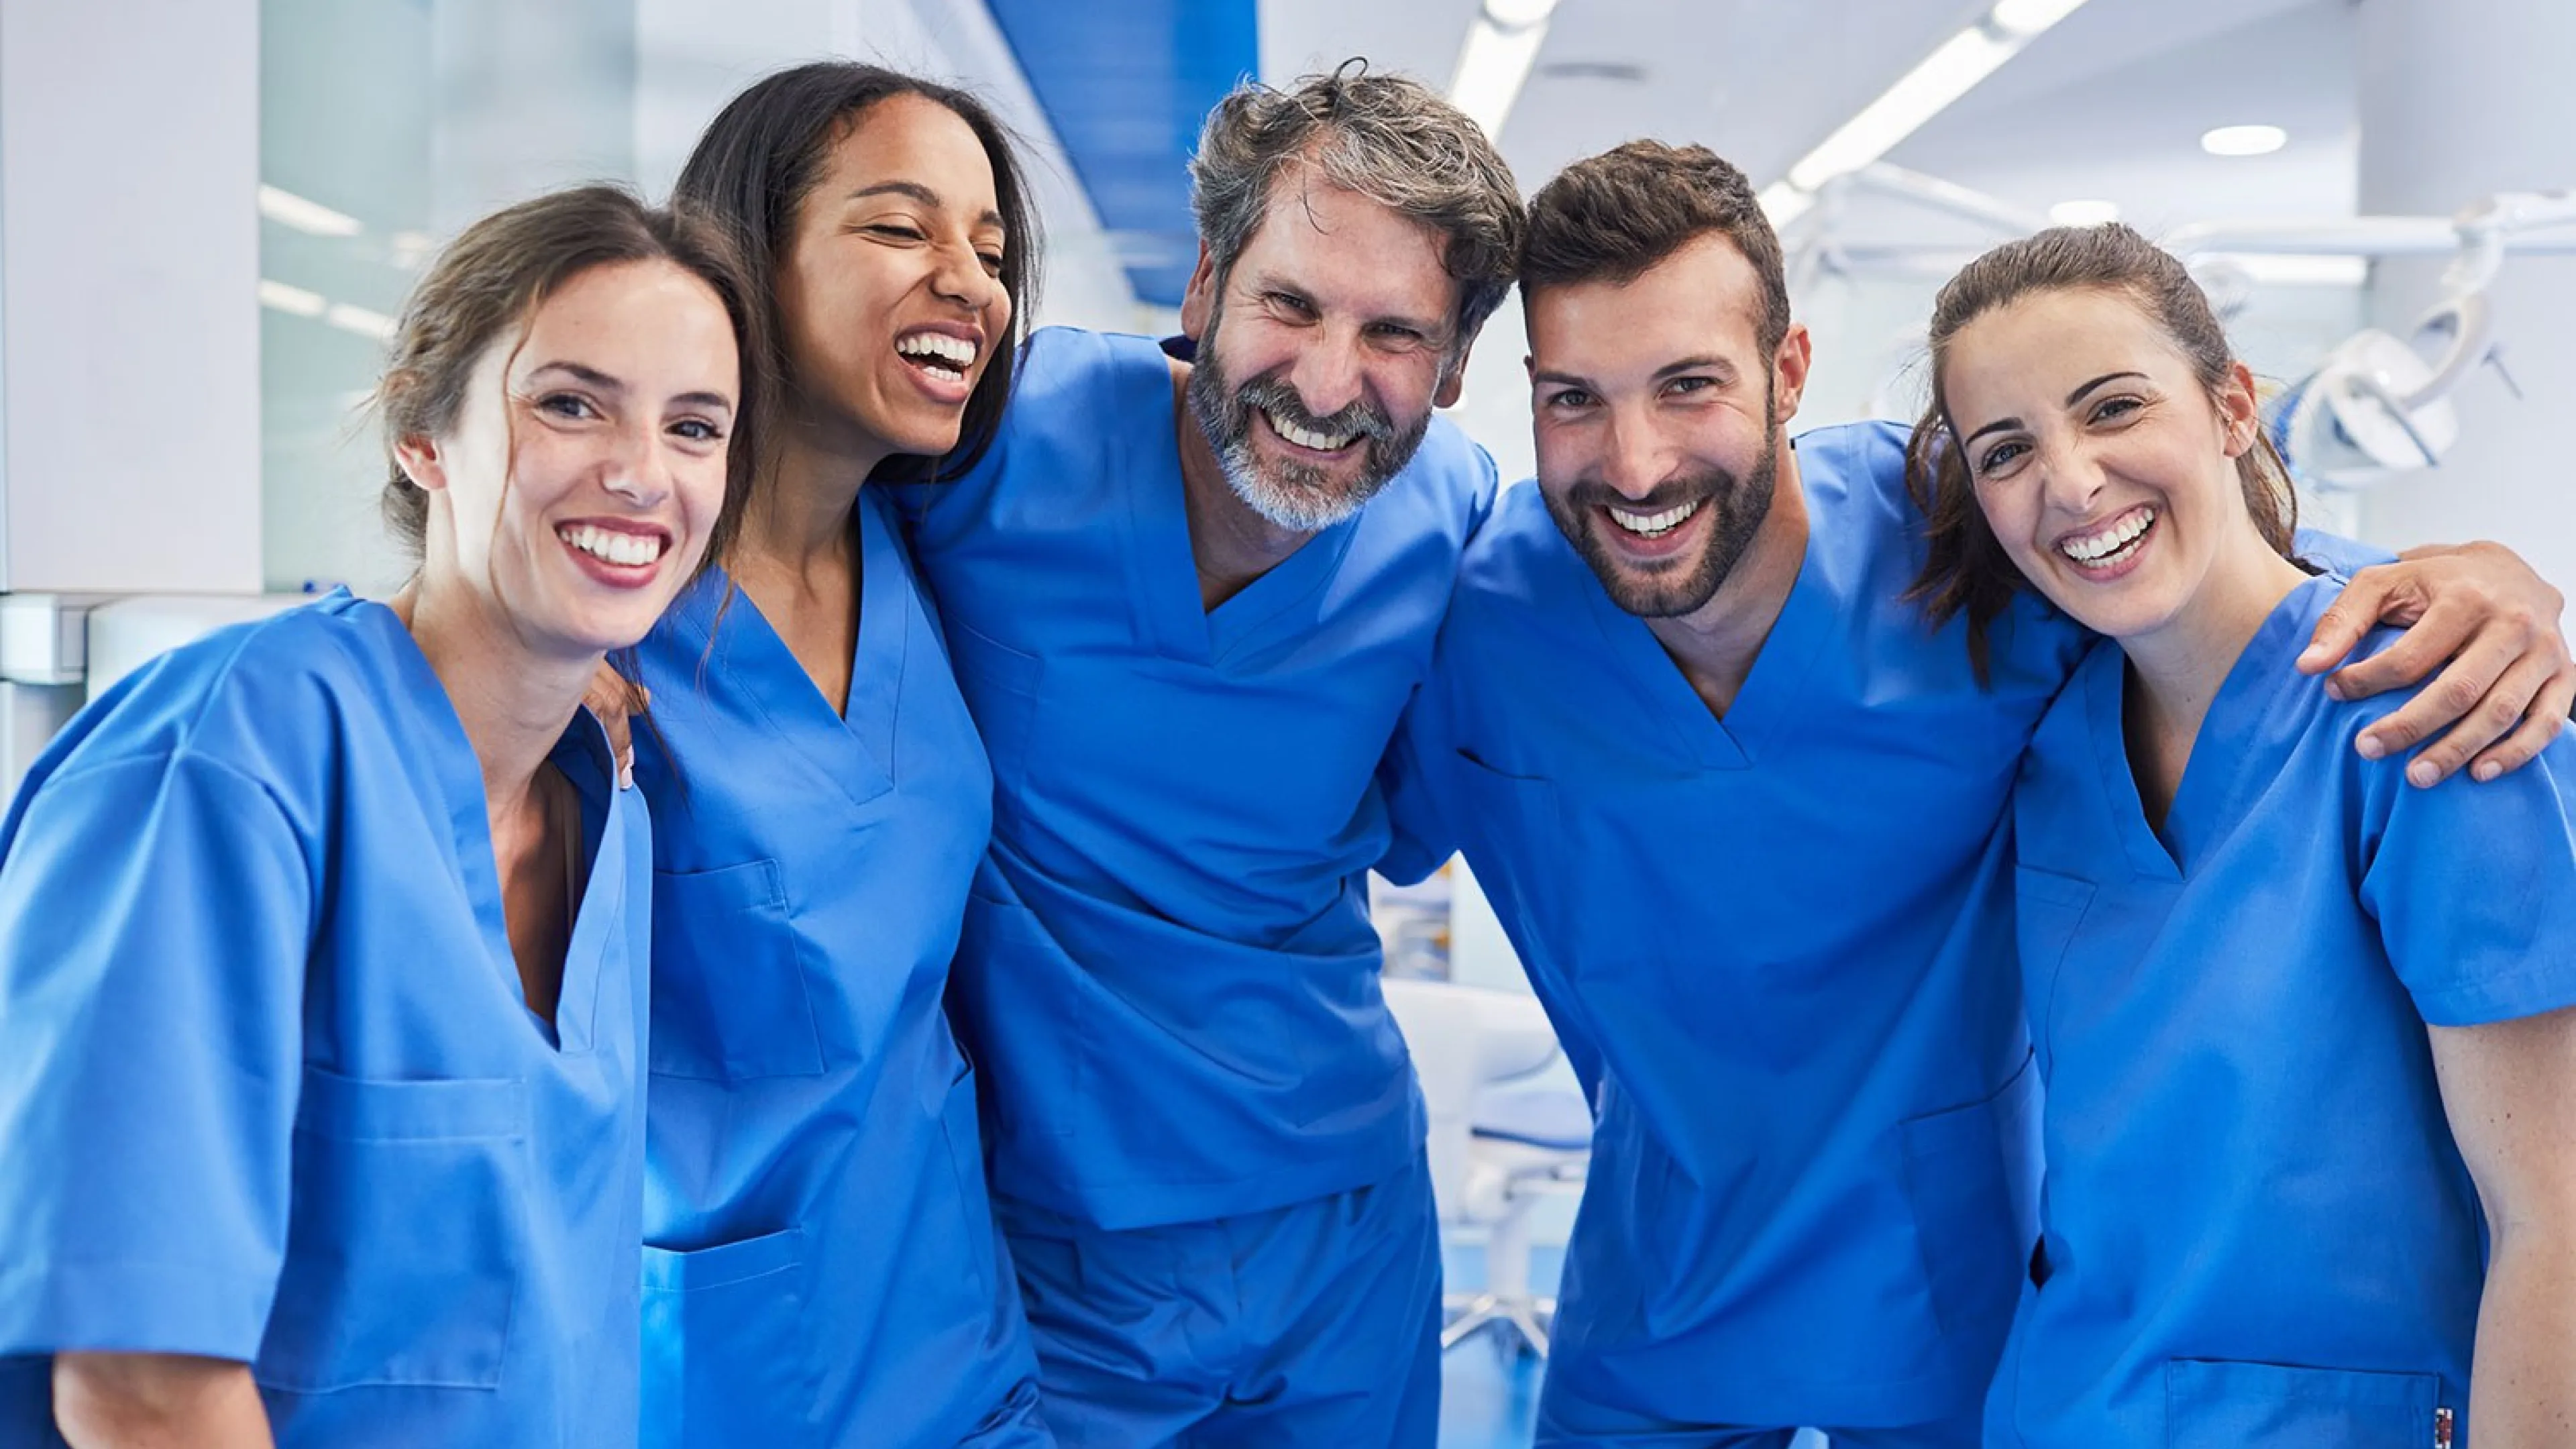 Group of dental assistants smiling